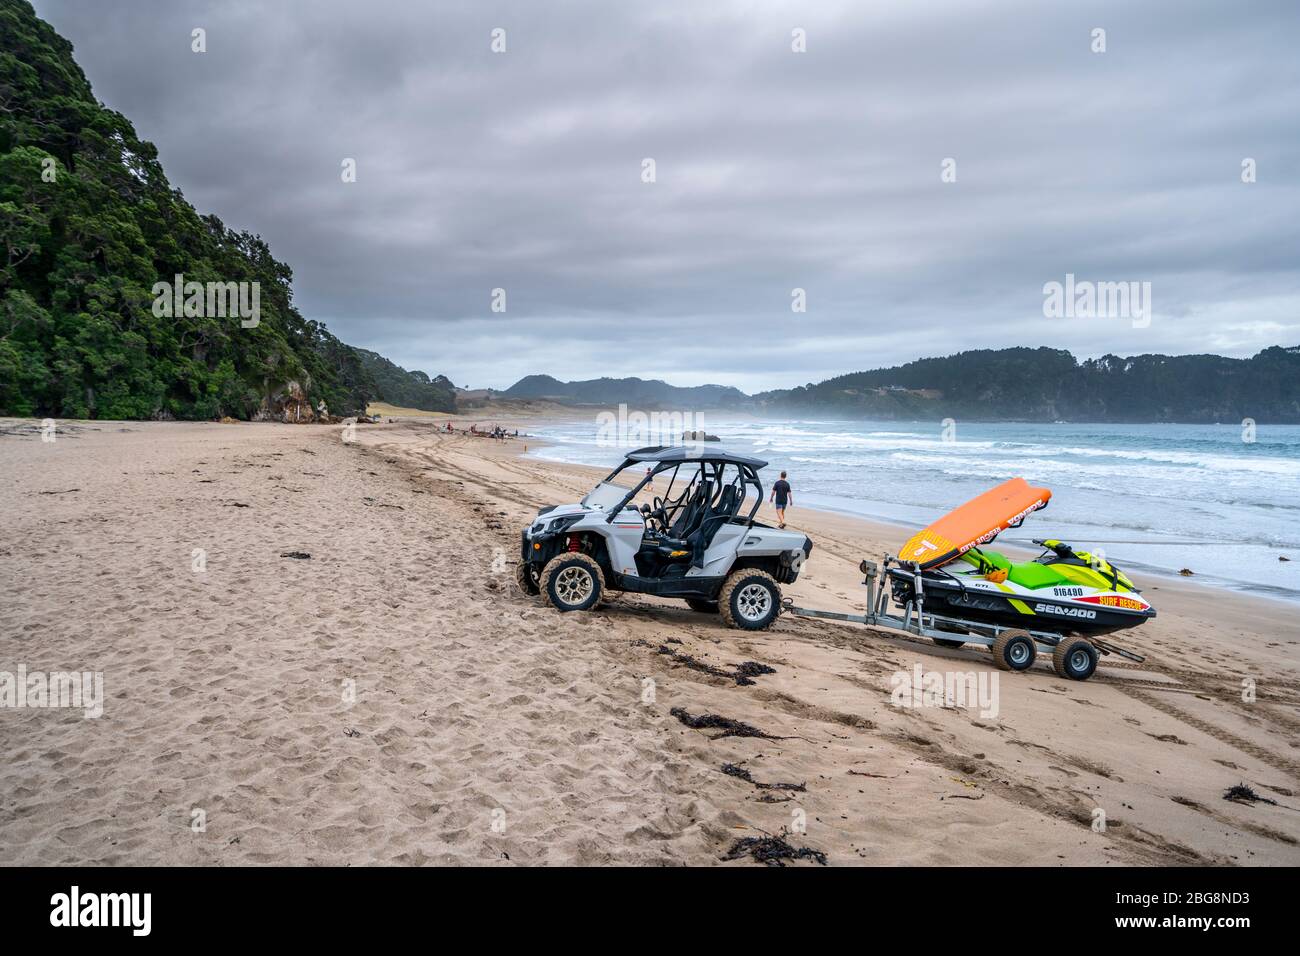 Surf Life Saving ATV and jetski on Hot Water Beach, Hahei, Coromandel Peninsula, North Island, New Zealand Stock Photo